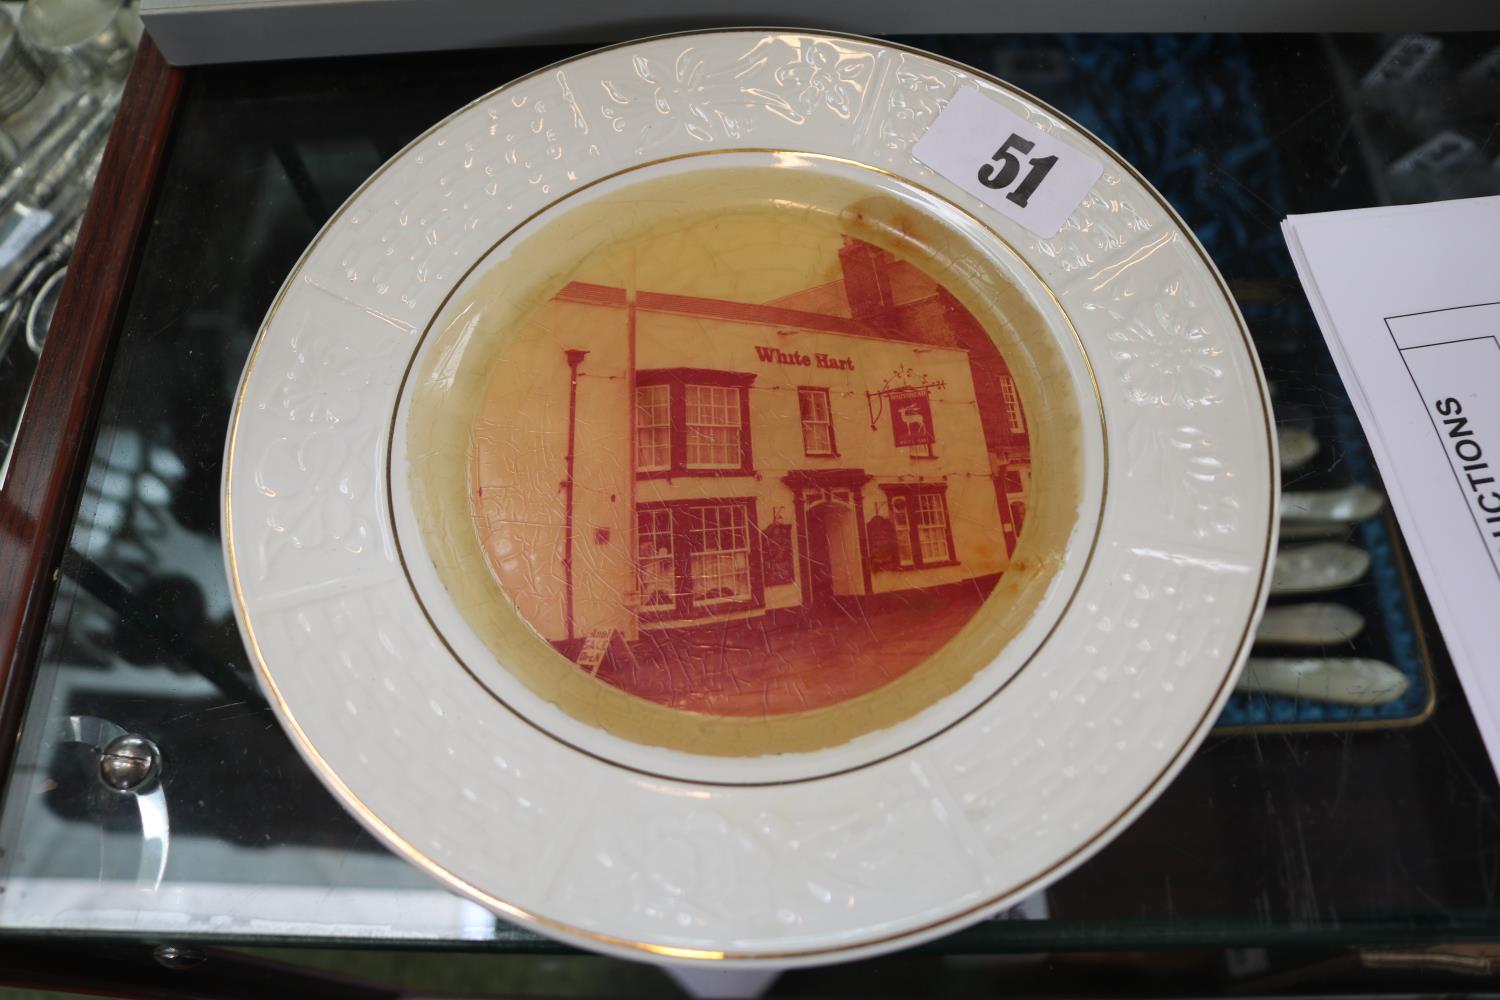 Local interest. White Hart Pub, St Ives, Cambridgeshire (Huntingdonshire) Falcon ware plate.